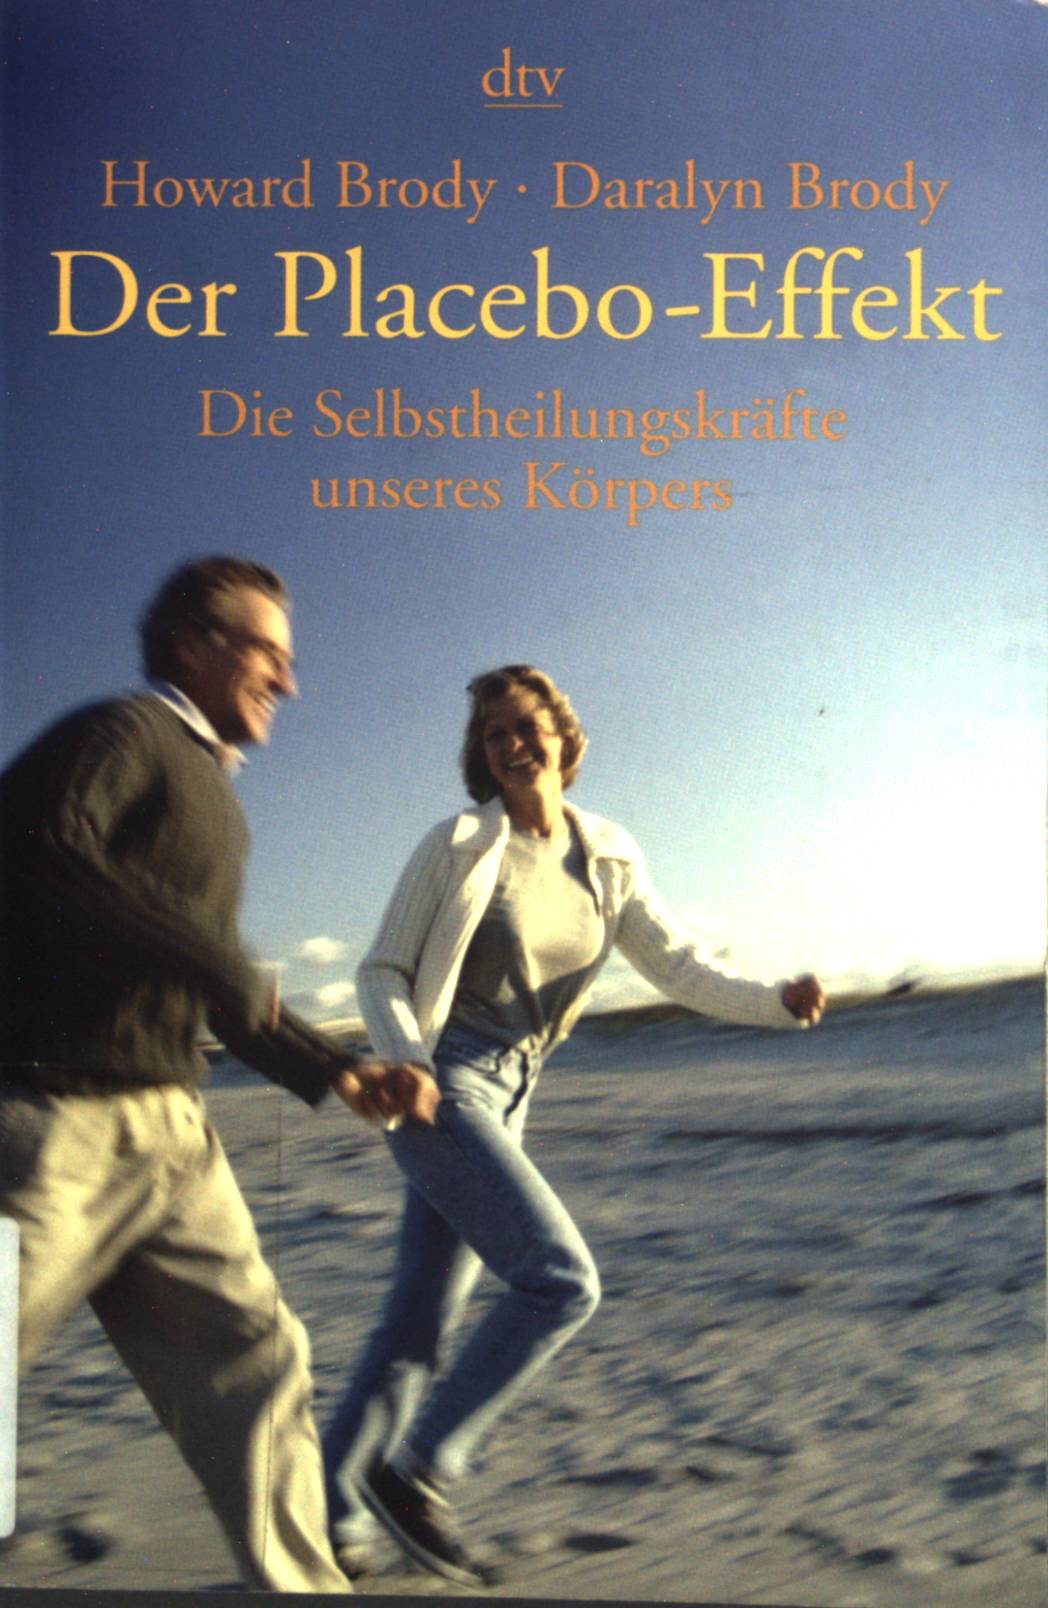 Der Placebo-Effekt : die Selbstheilungskräfte unseres Körpers. dtv ; (Nr 36312) - Brody, Howard und Daralyn Brody